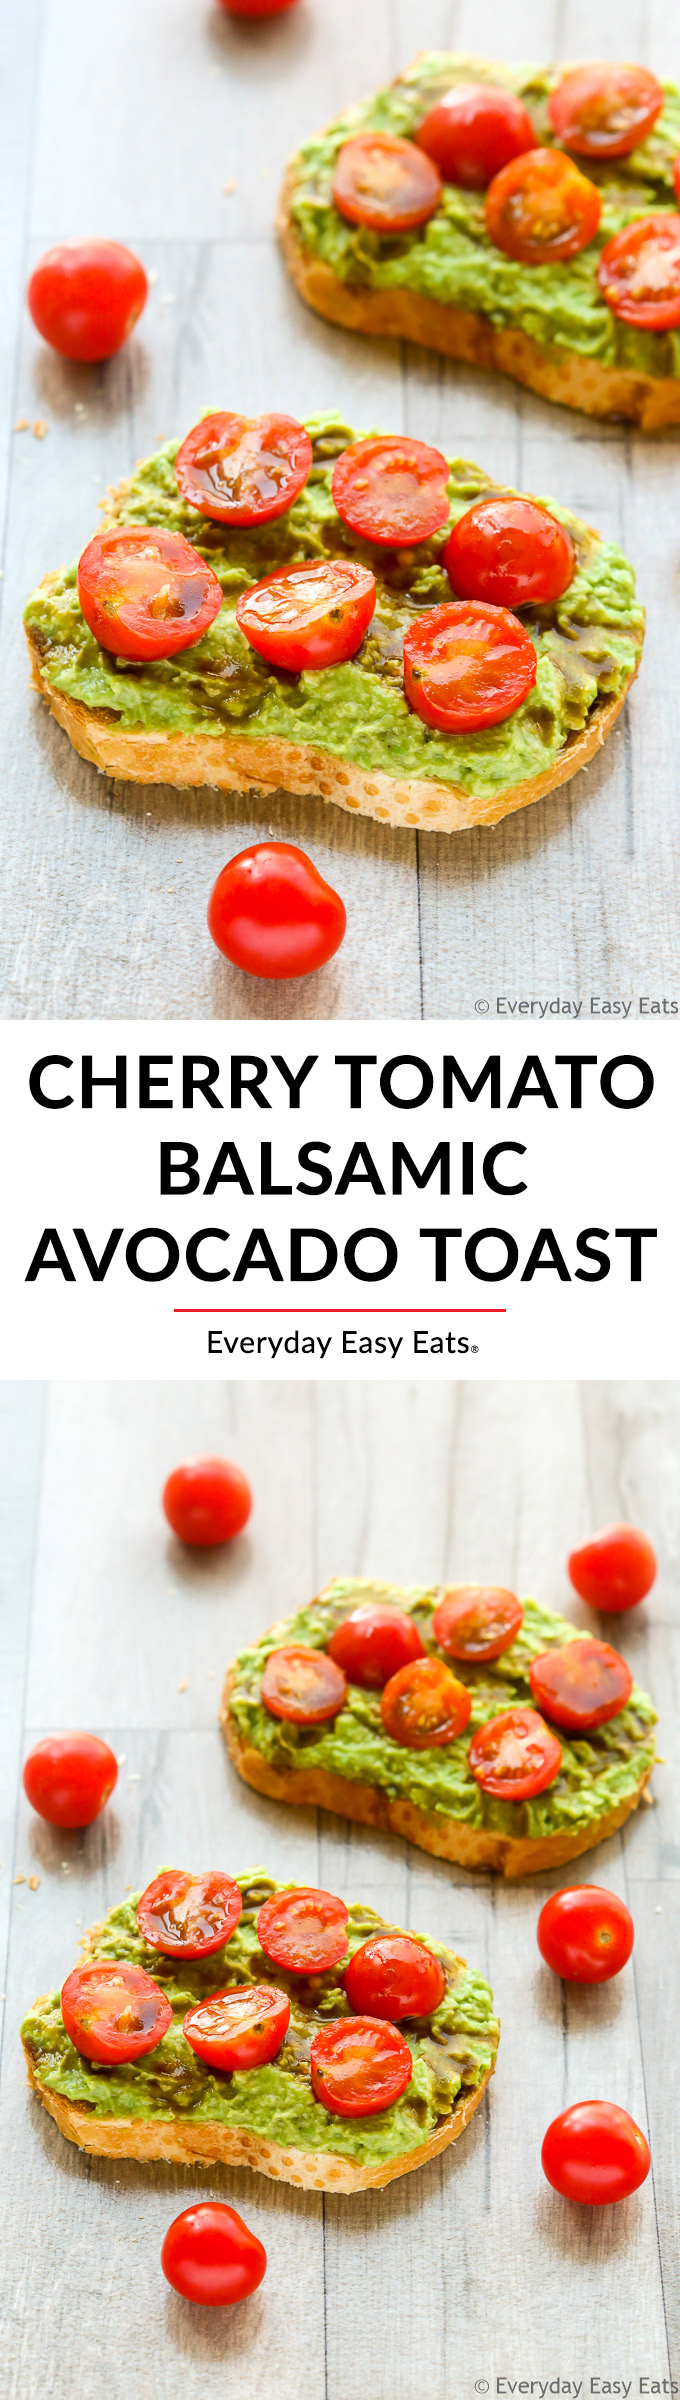 Easy Cherry Tomato Balsamic Avocado Toast | Recipe at EverydayEasyEats.com